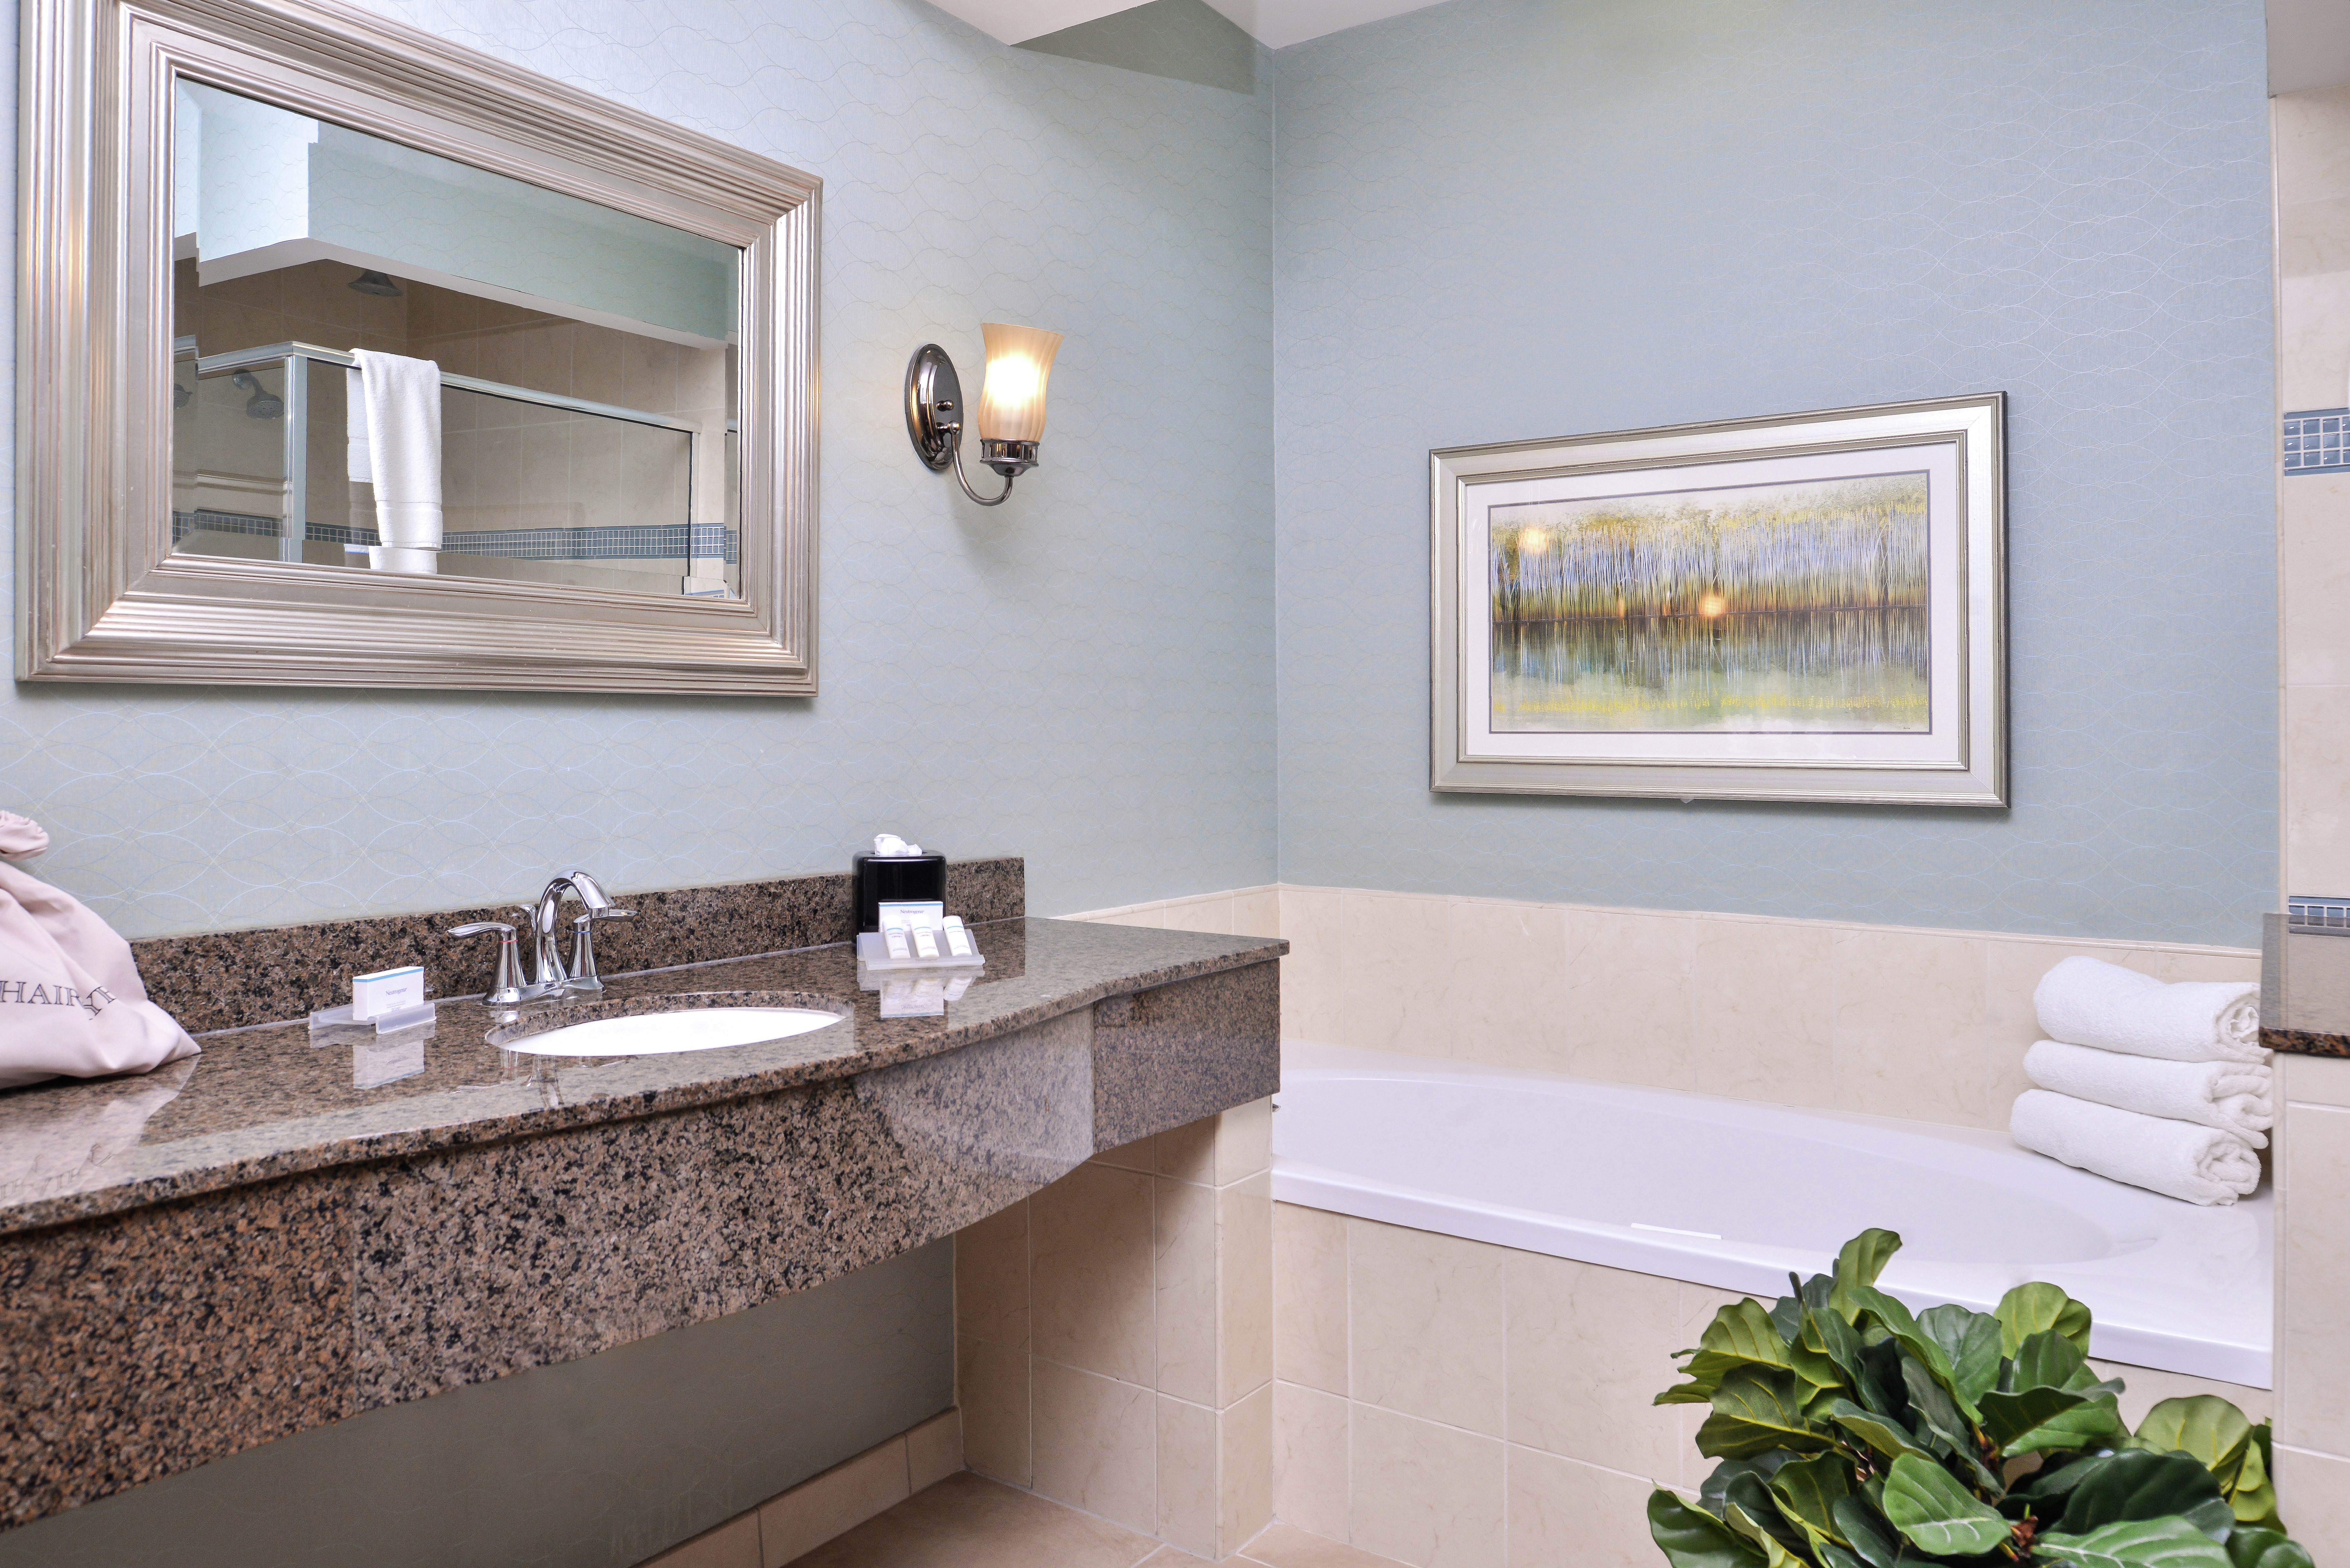 King Suite Bathroom with Tub, Vanity, and Amenities